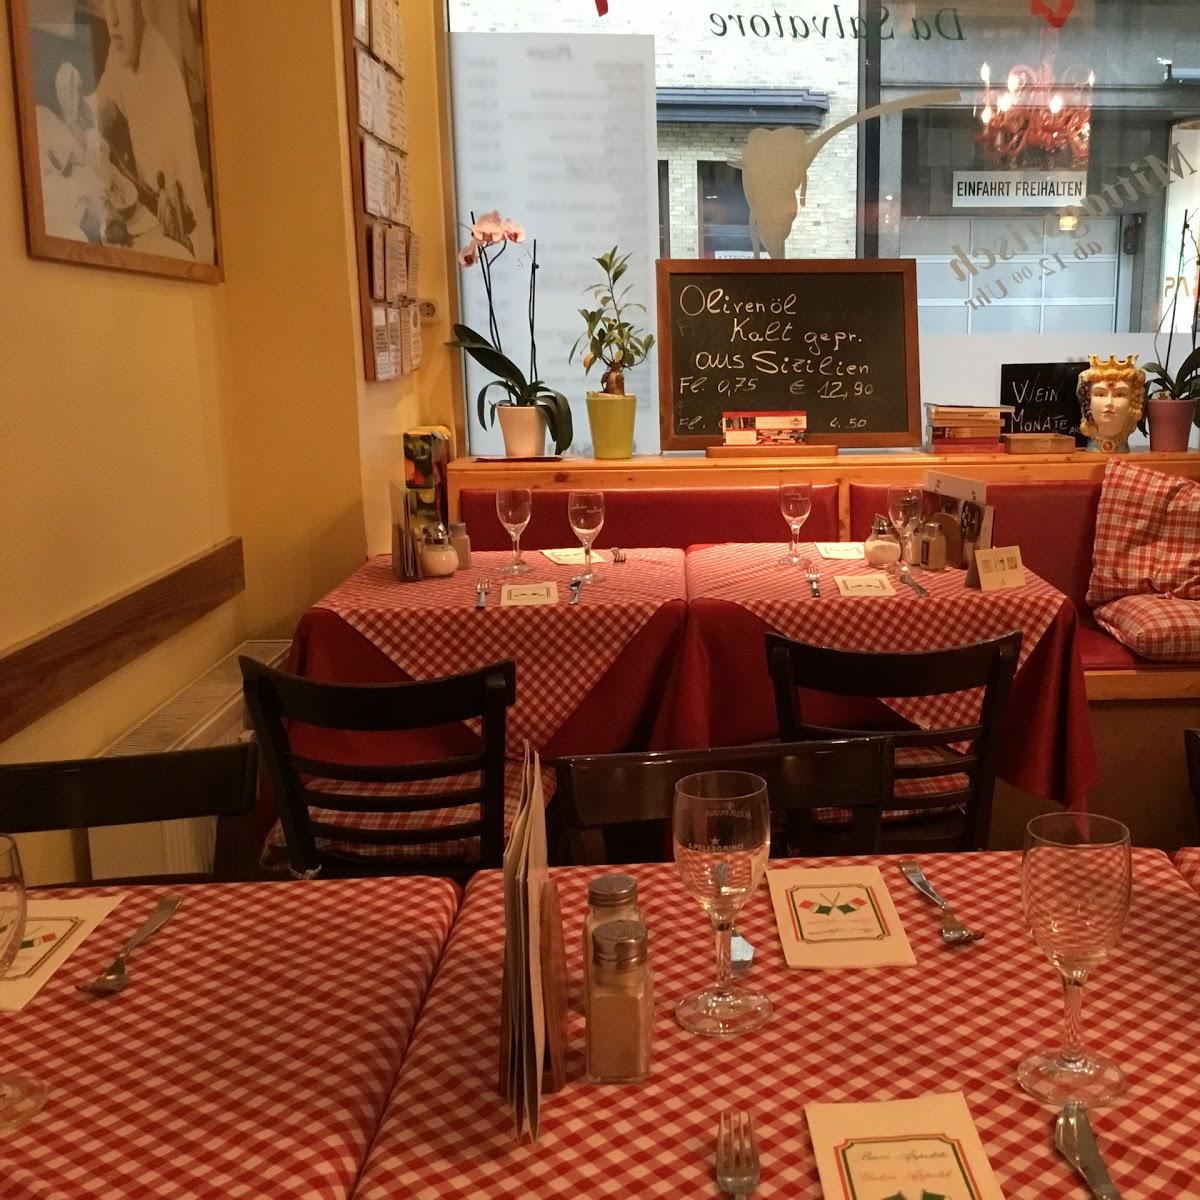 Restaurant "Bistro La Forchetta" in Hamburg